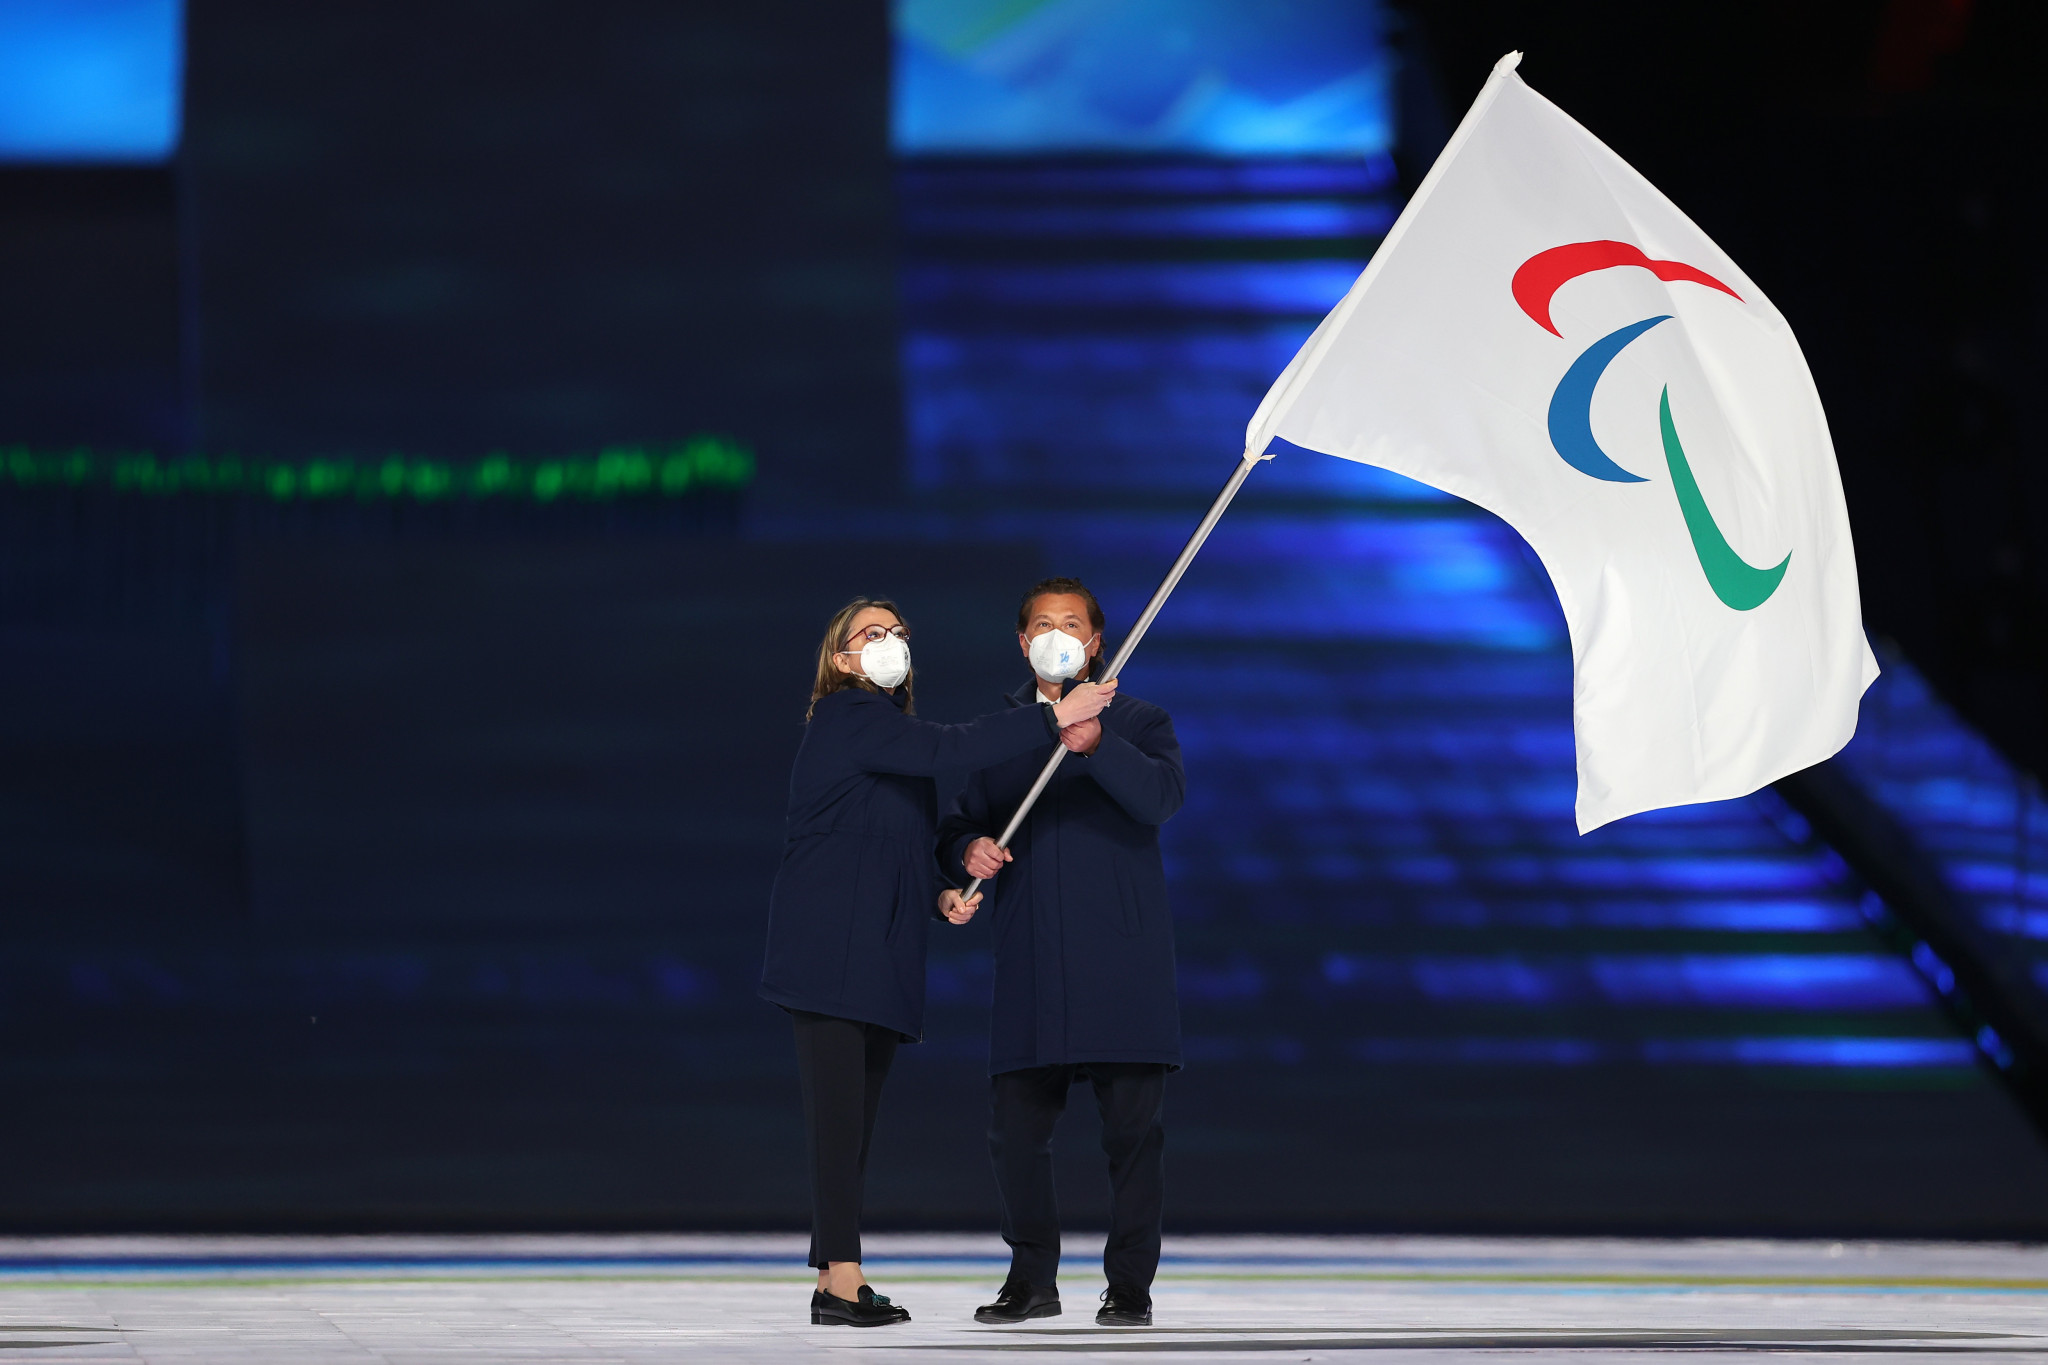 Milan Cortina 2026 receives Paralympic Flag at Beijing 2022 Closing Ceremony